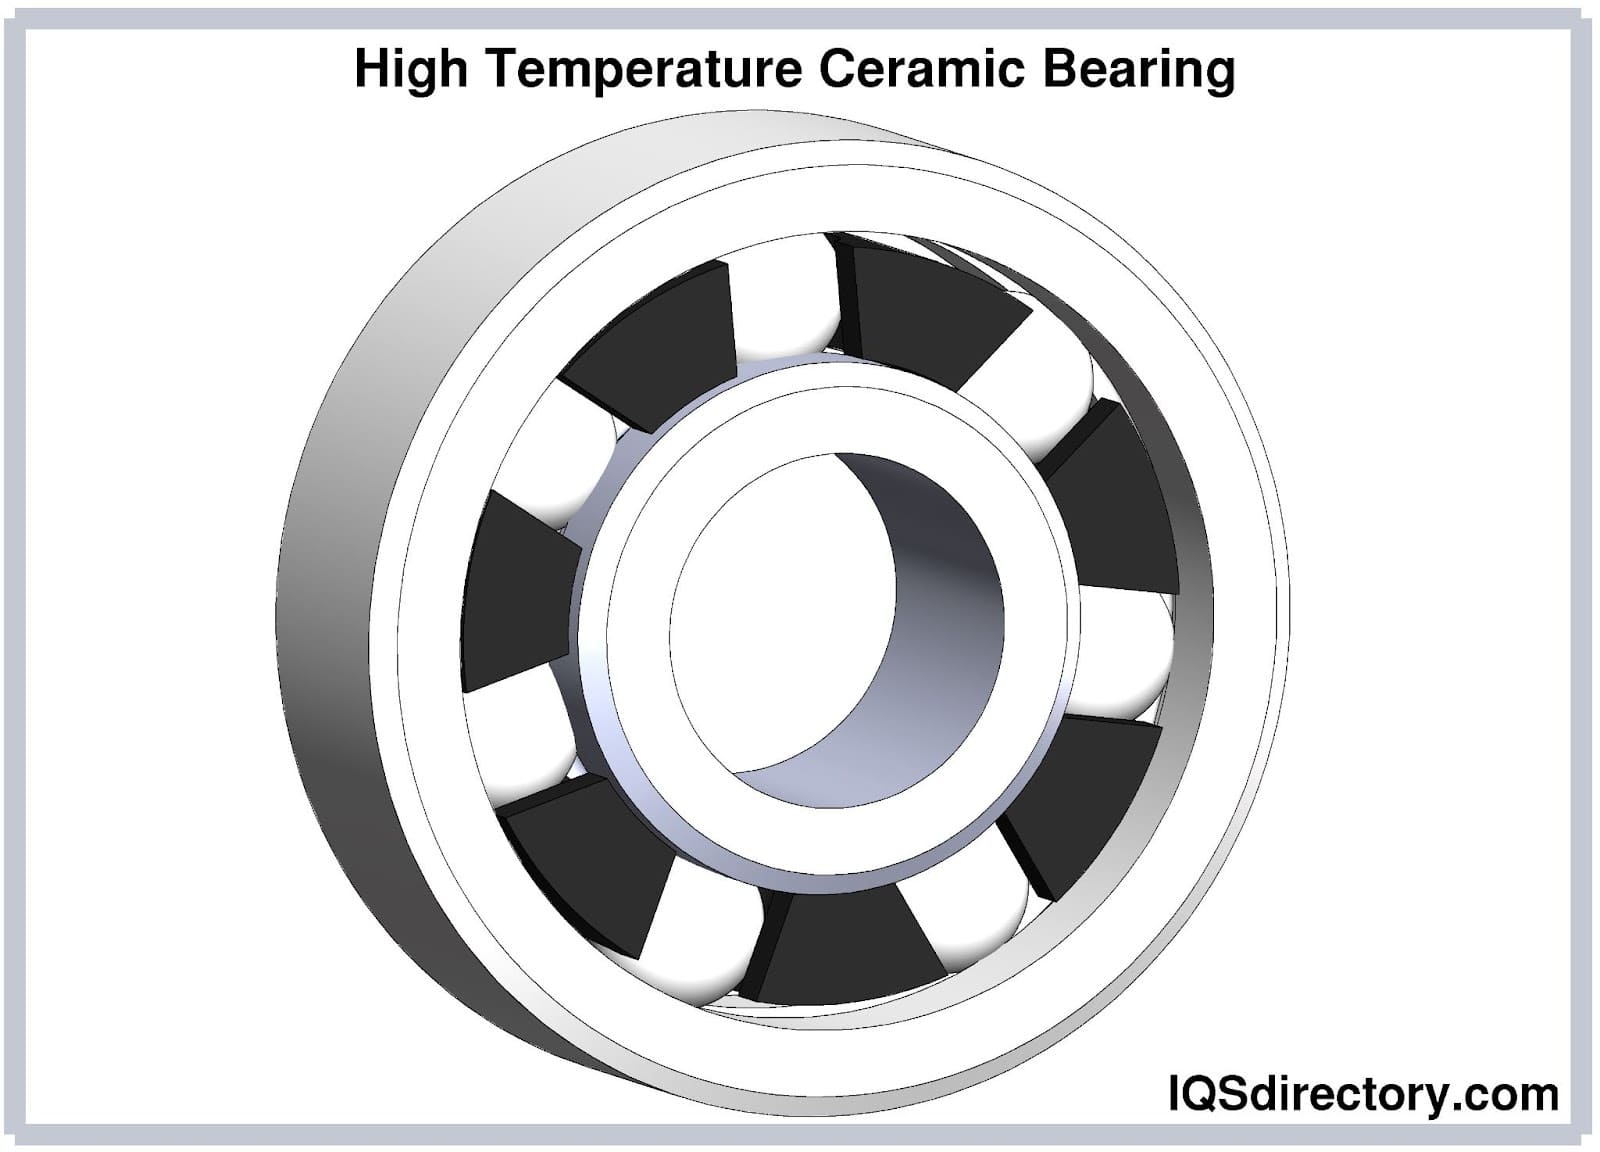 High Temperature Ceramic Bearing